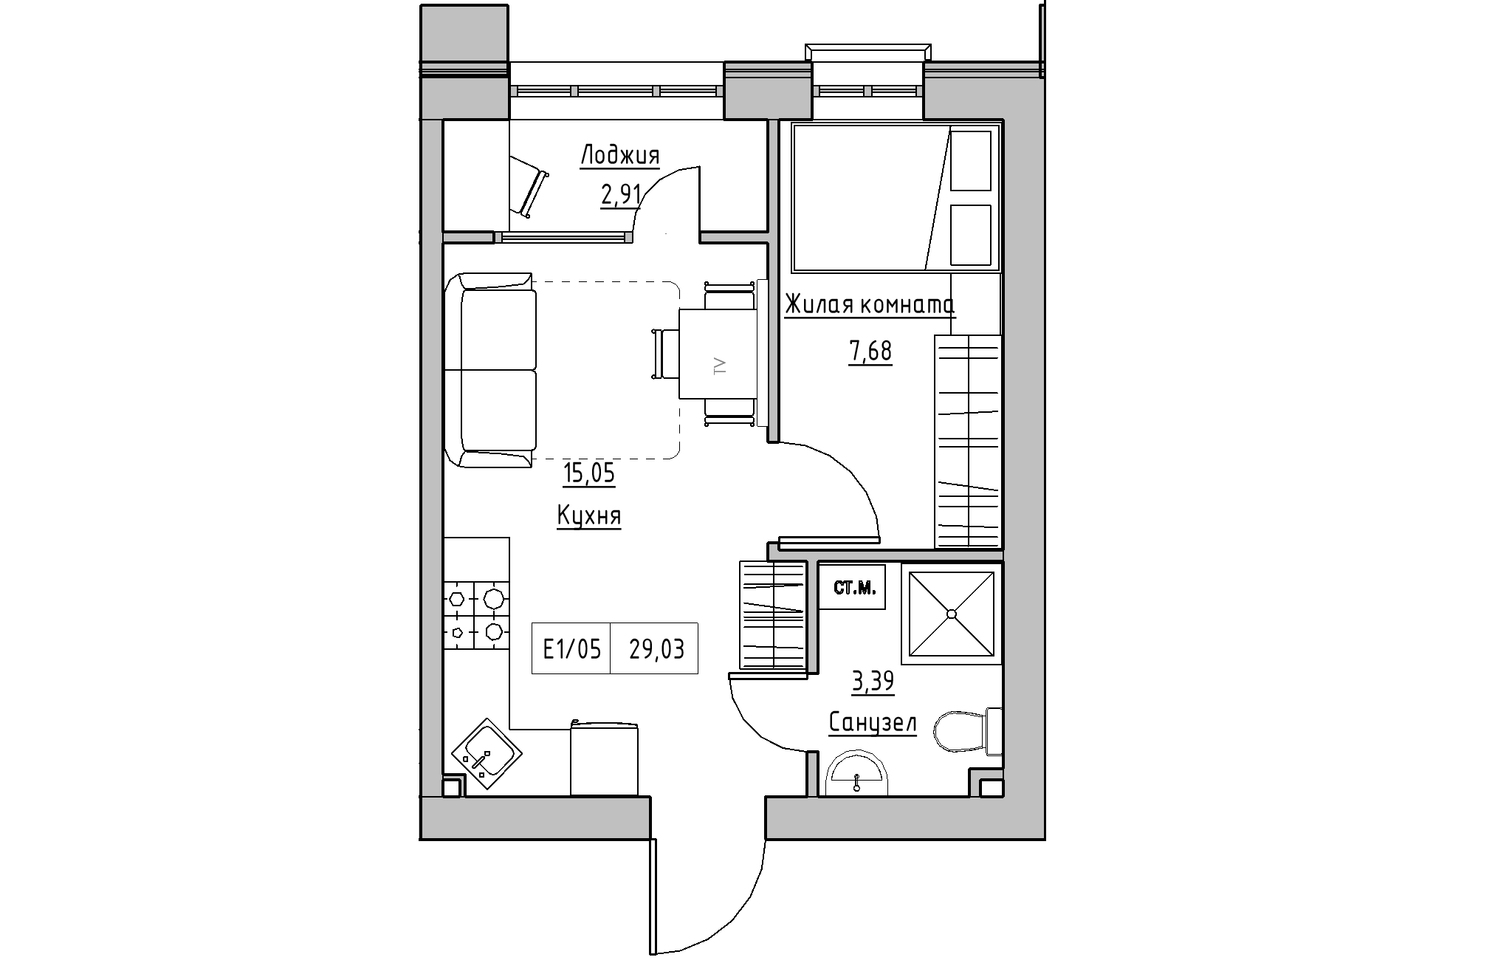 Planning 1-rm flats area 29.03m2, KS-010-04/0007.